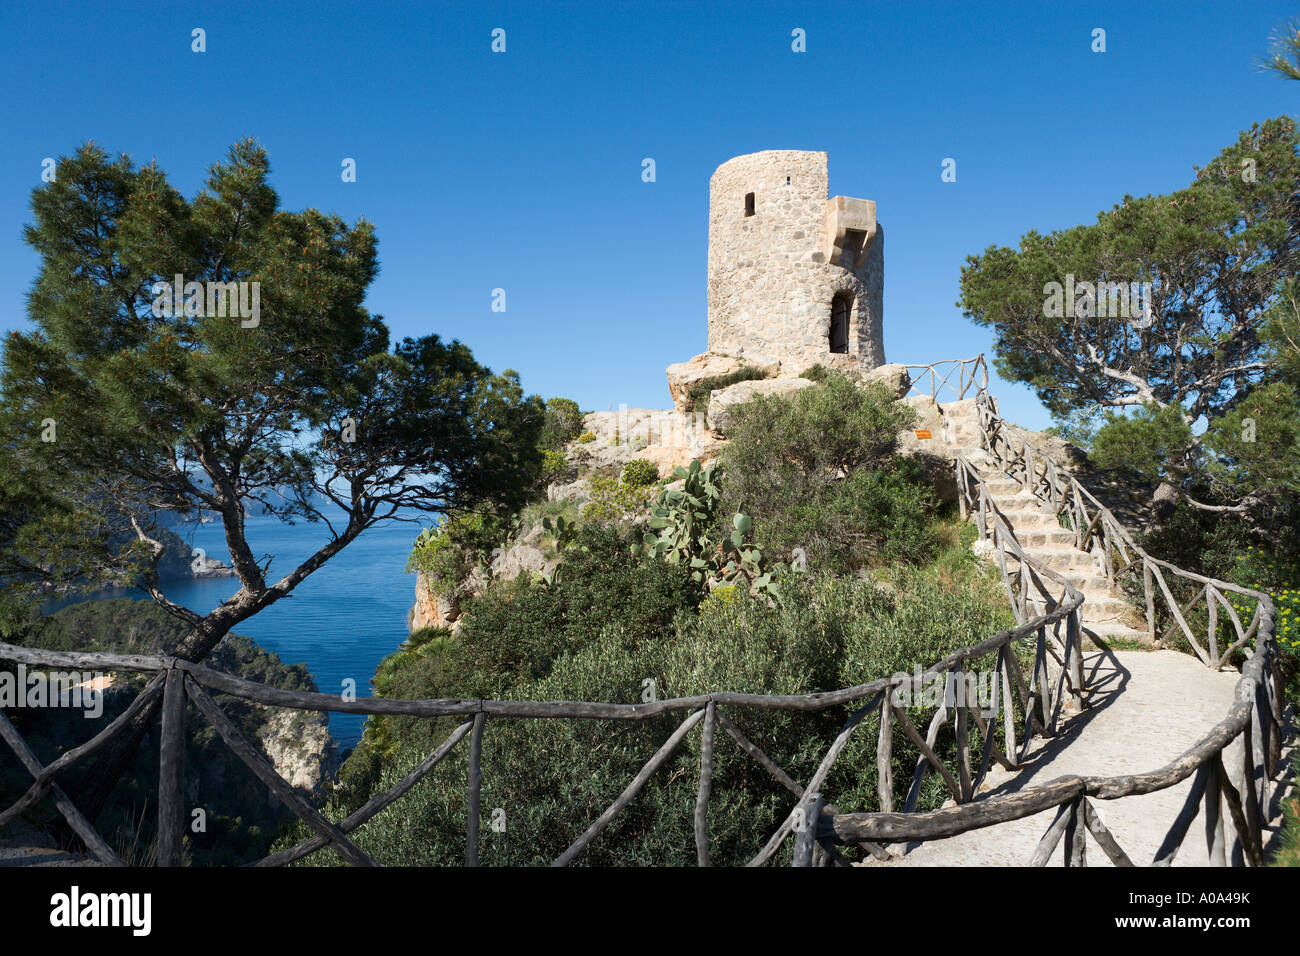 Mirador Torre del Verger près de Banyalbufar, côte ouest, Mallorca, Espagne Banque D'Images